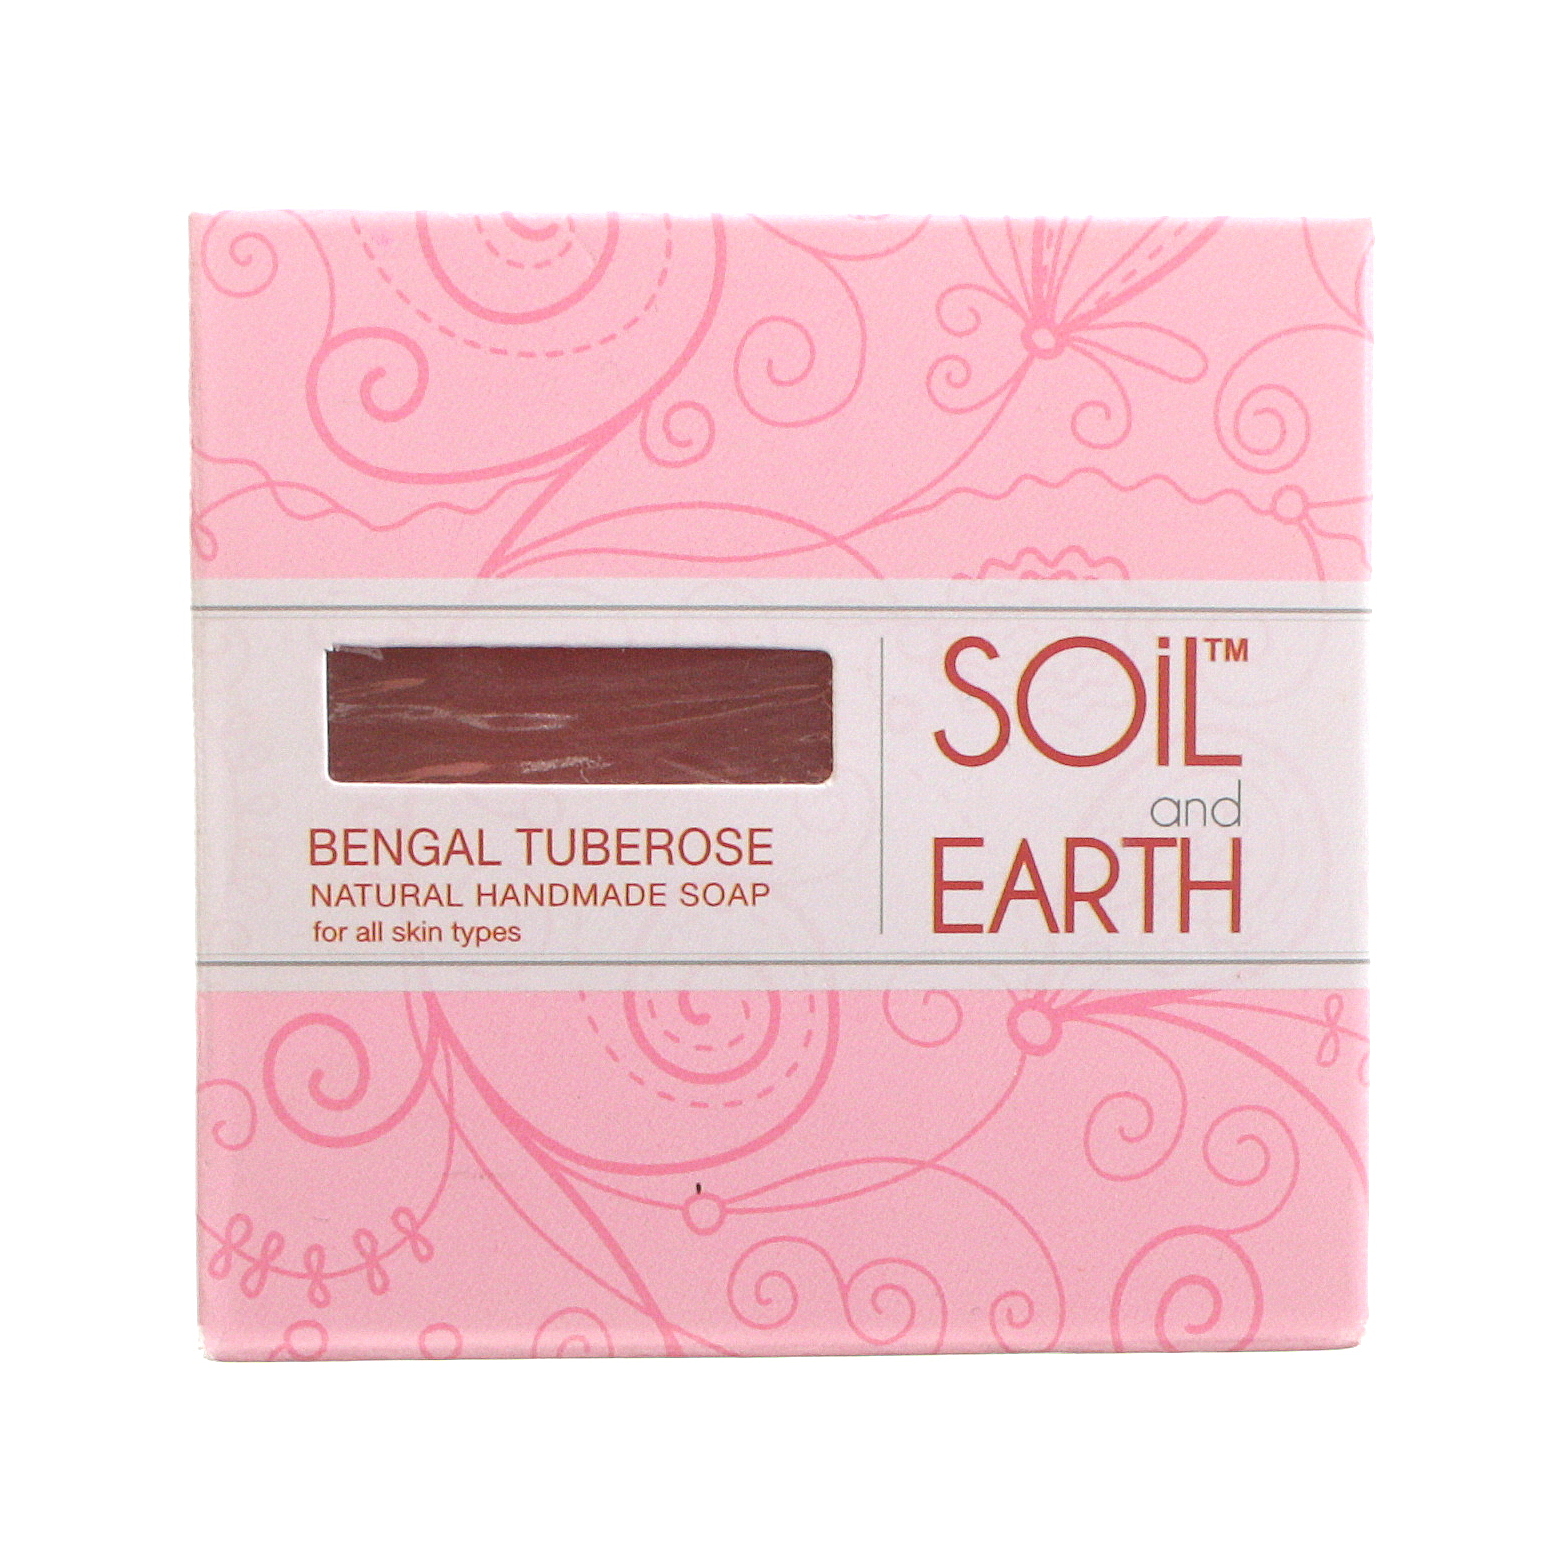 Bengal turberose ayurvedic soap bar by Soil and Earth